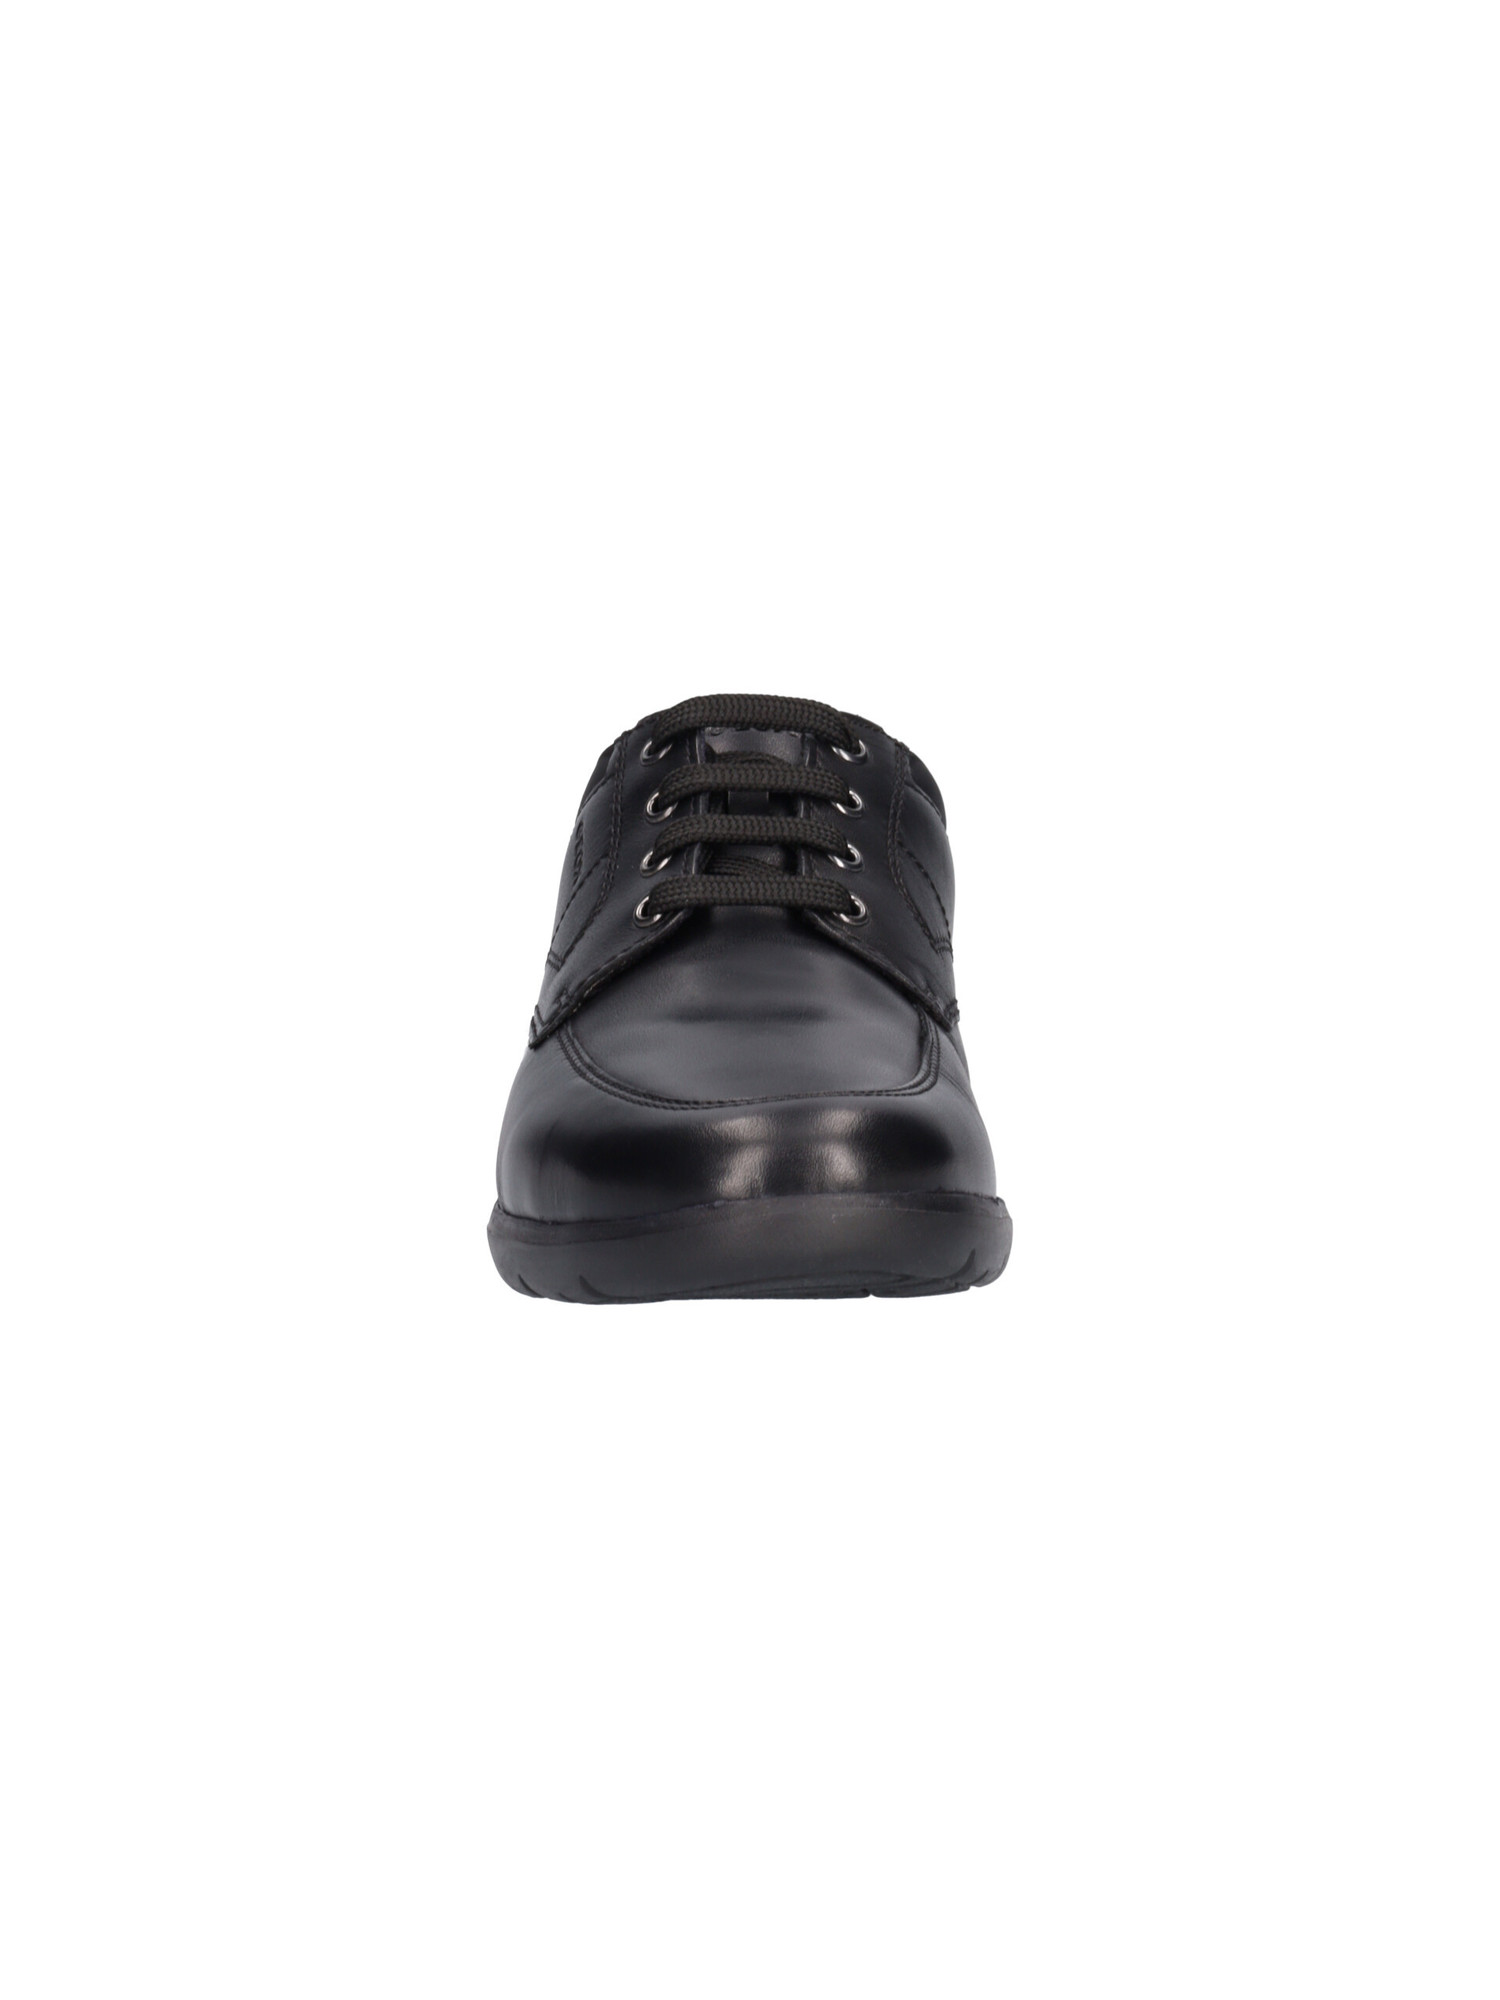 scarpa-casual-geox-leitan-da-uomo-nera-d2935d